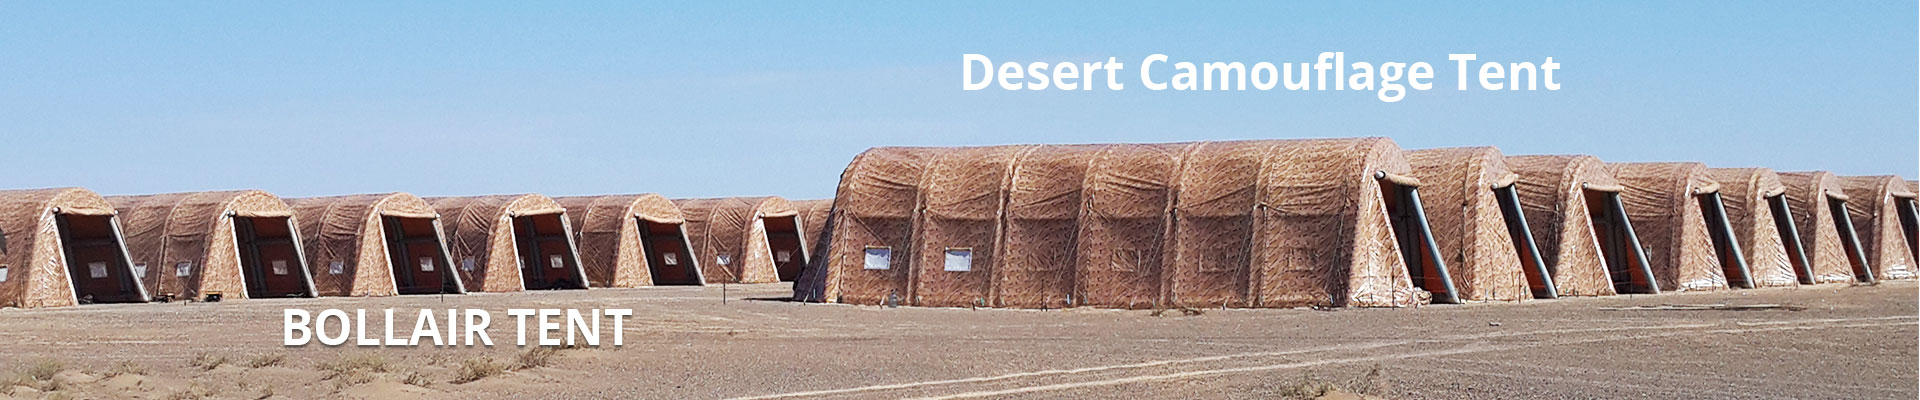 Desert Camouflage Tent